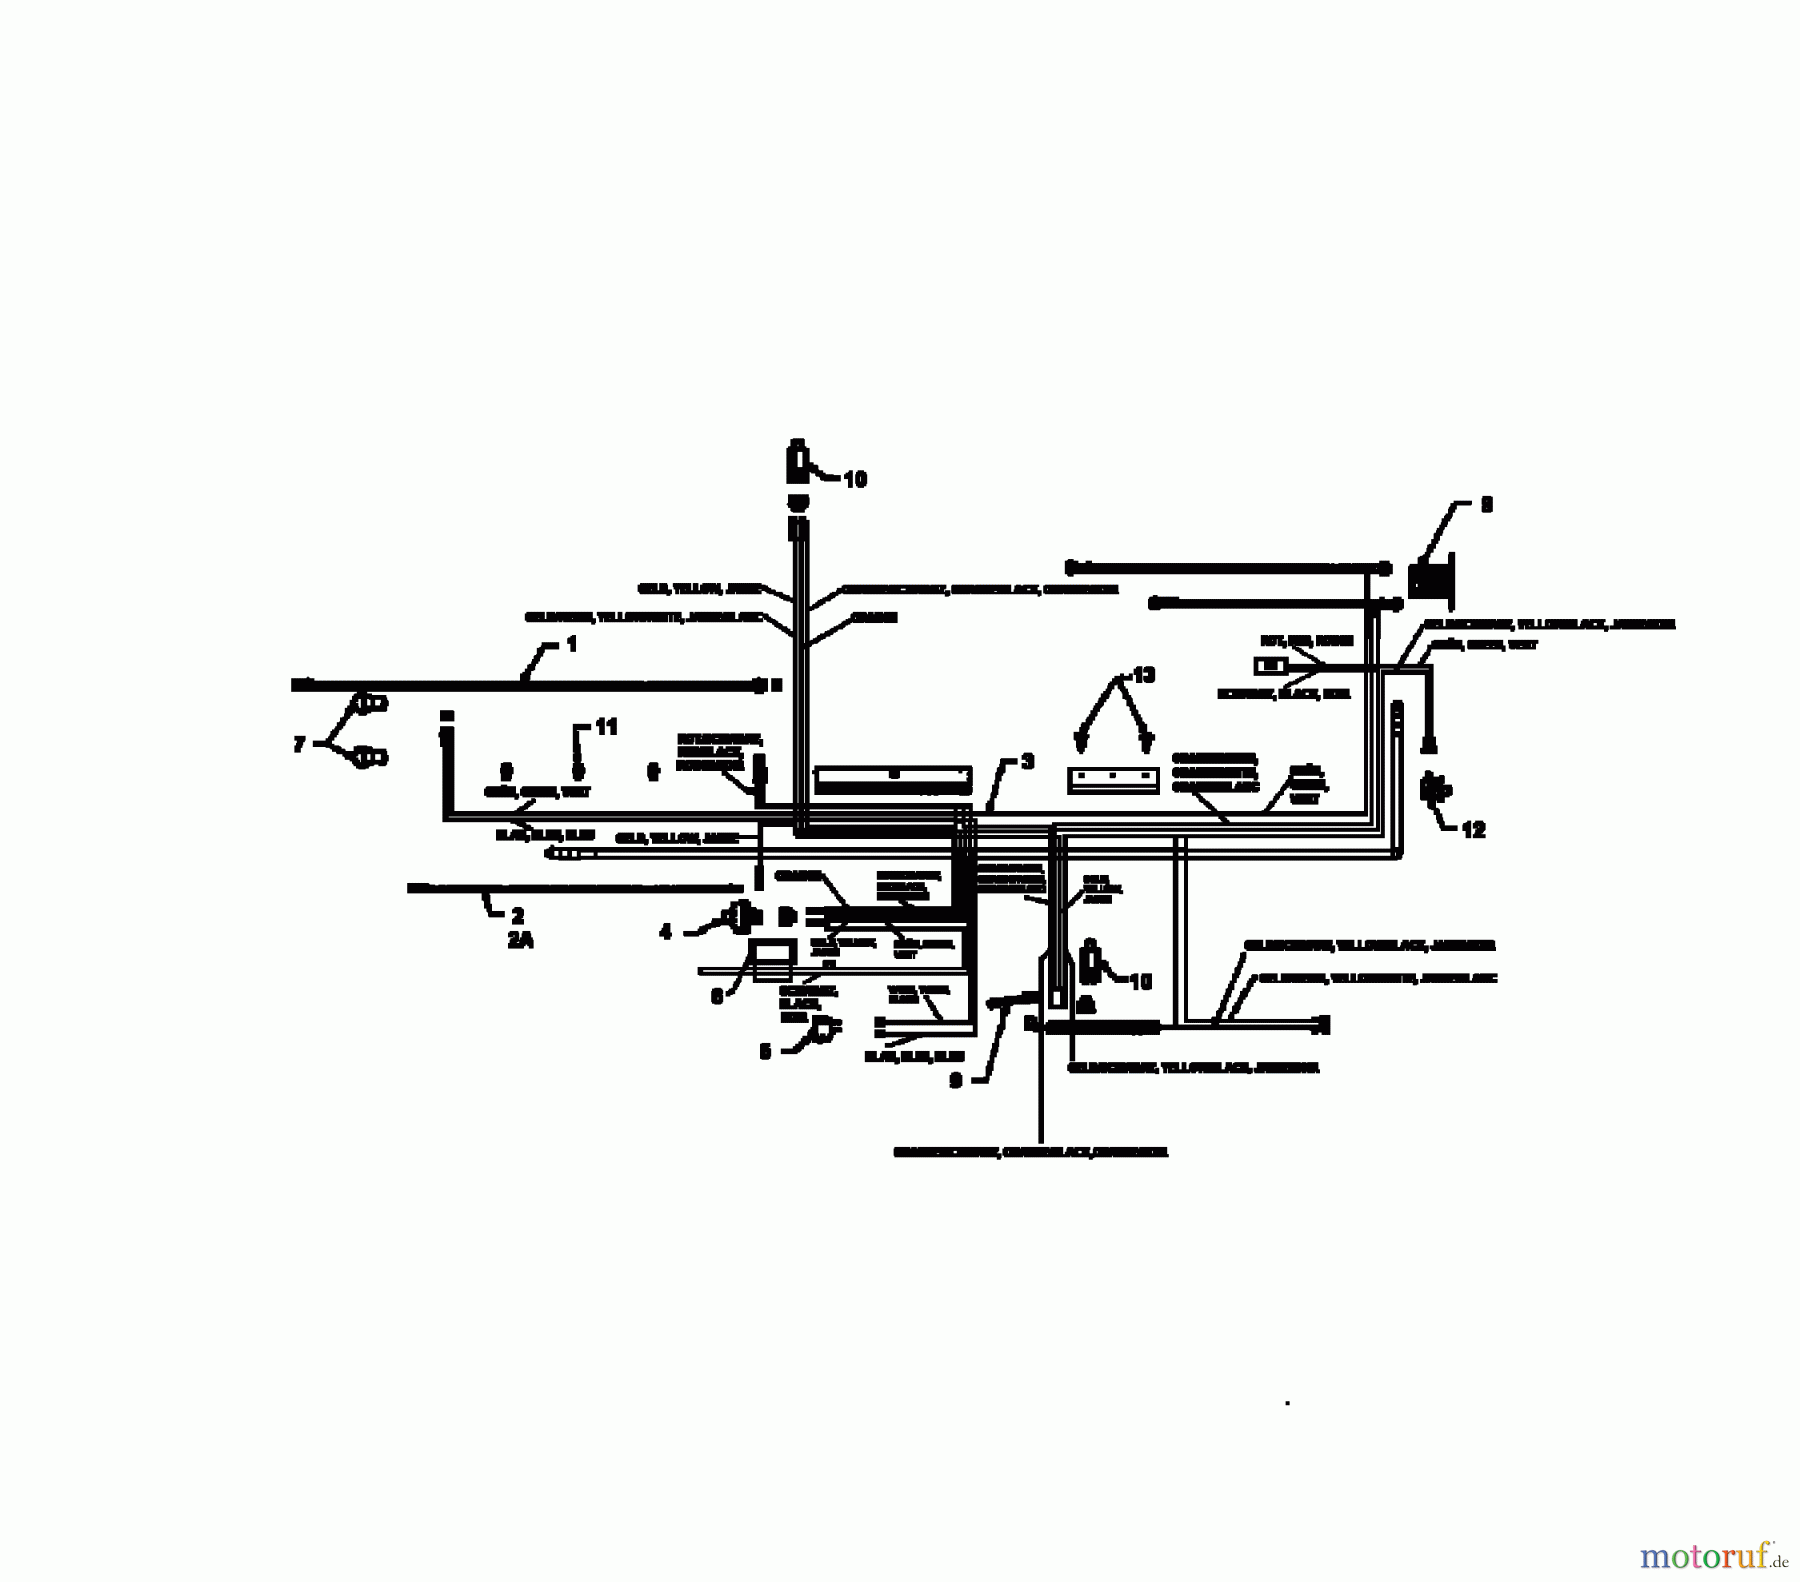  MTD Lawn tractors E 160 136R765N678  (1996) Wiring diagram Vanguard